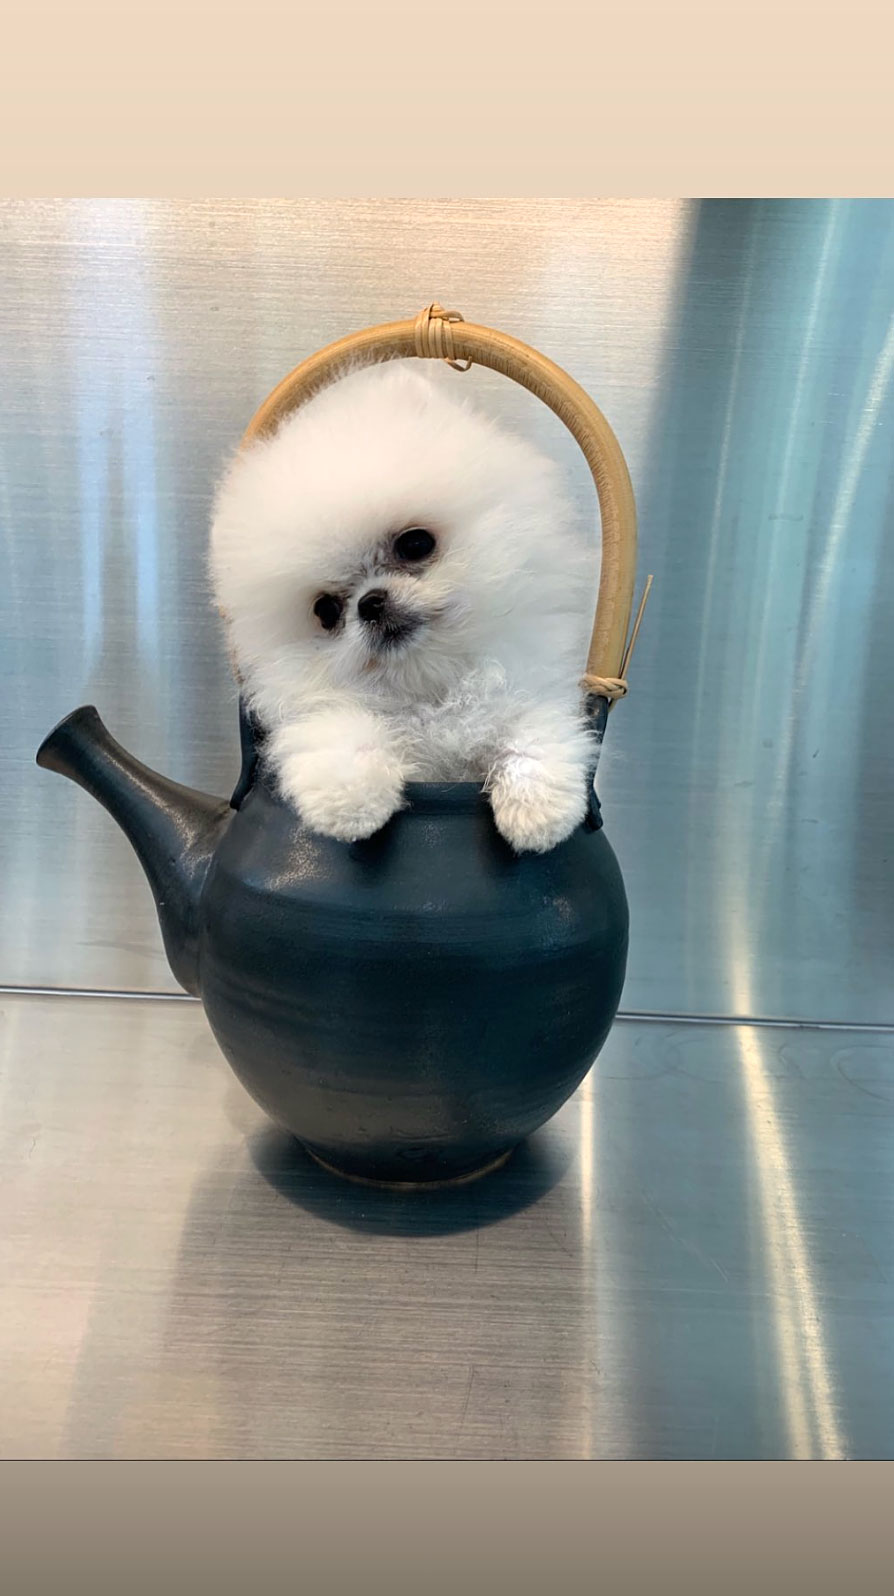 Gucci: The Gourmet Pomeranian - Creature Companions